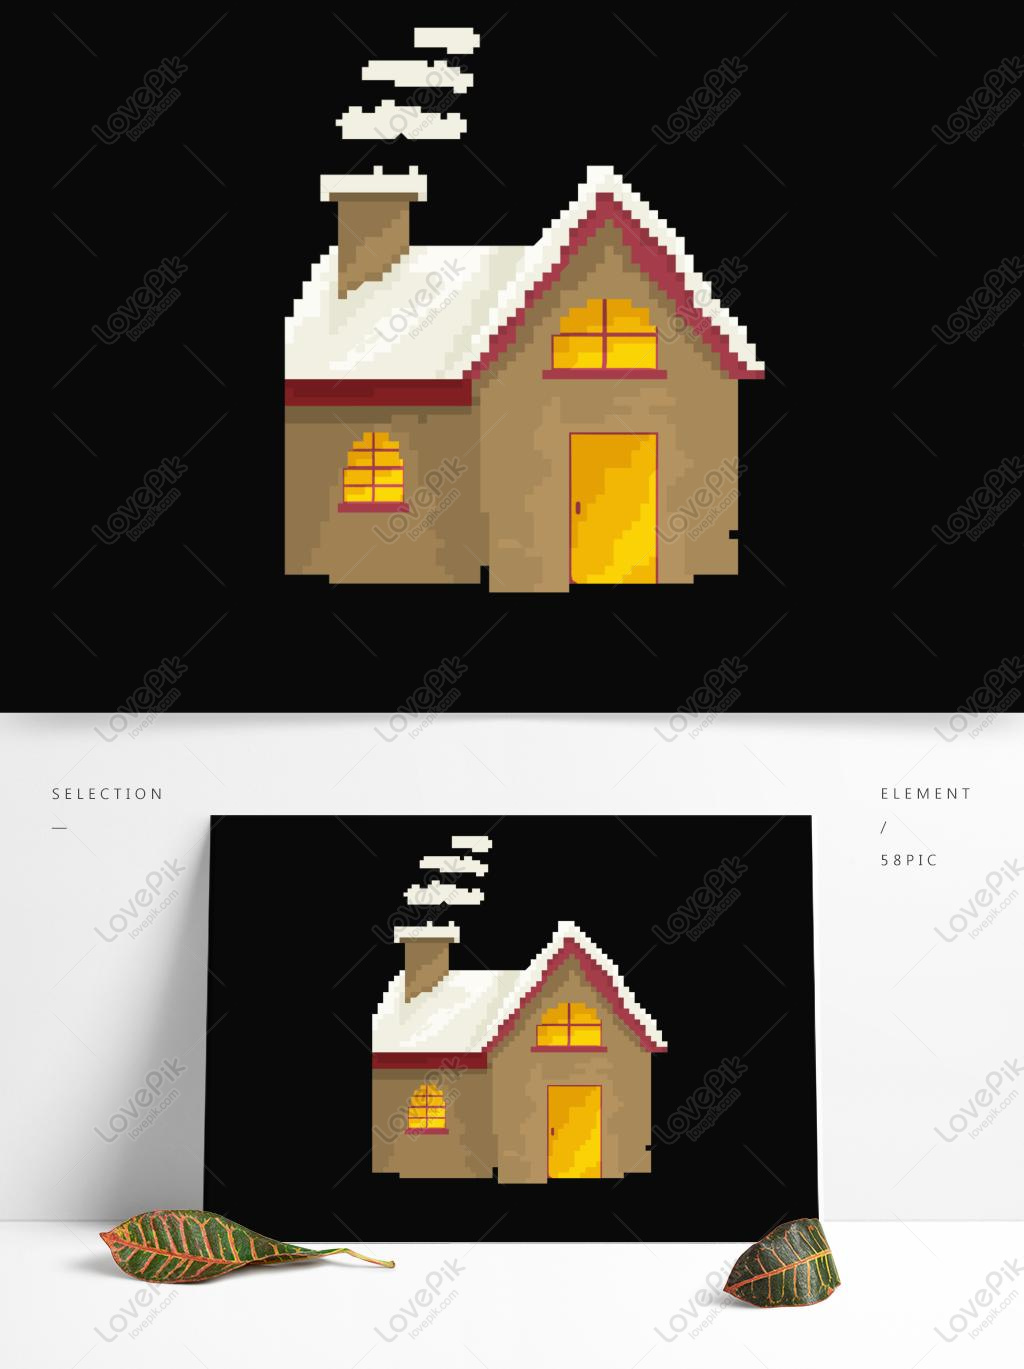 Retro Pixelated Chimney House Cartoon Design PNG Image PSD images ...